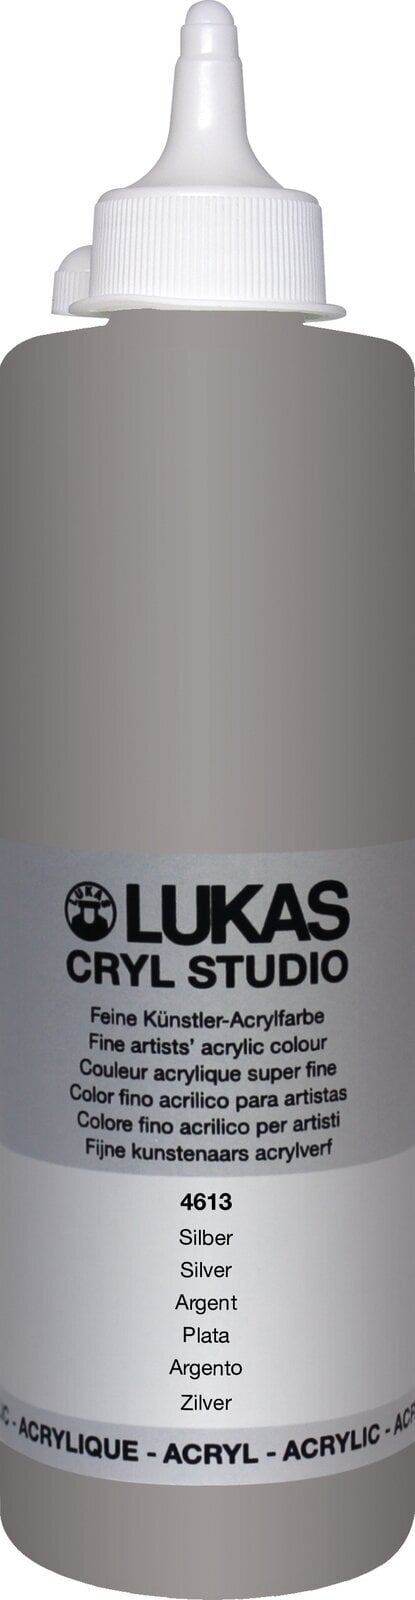 Acrylic Paint Lukas Cryl Studio Acrylic Paint 500 ml Silver